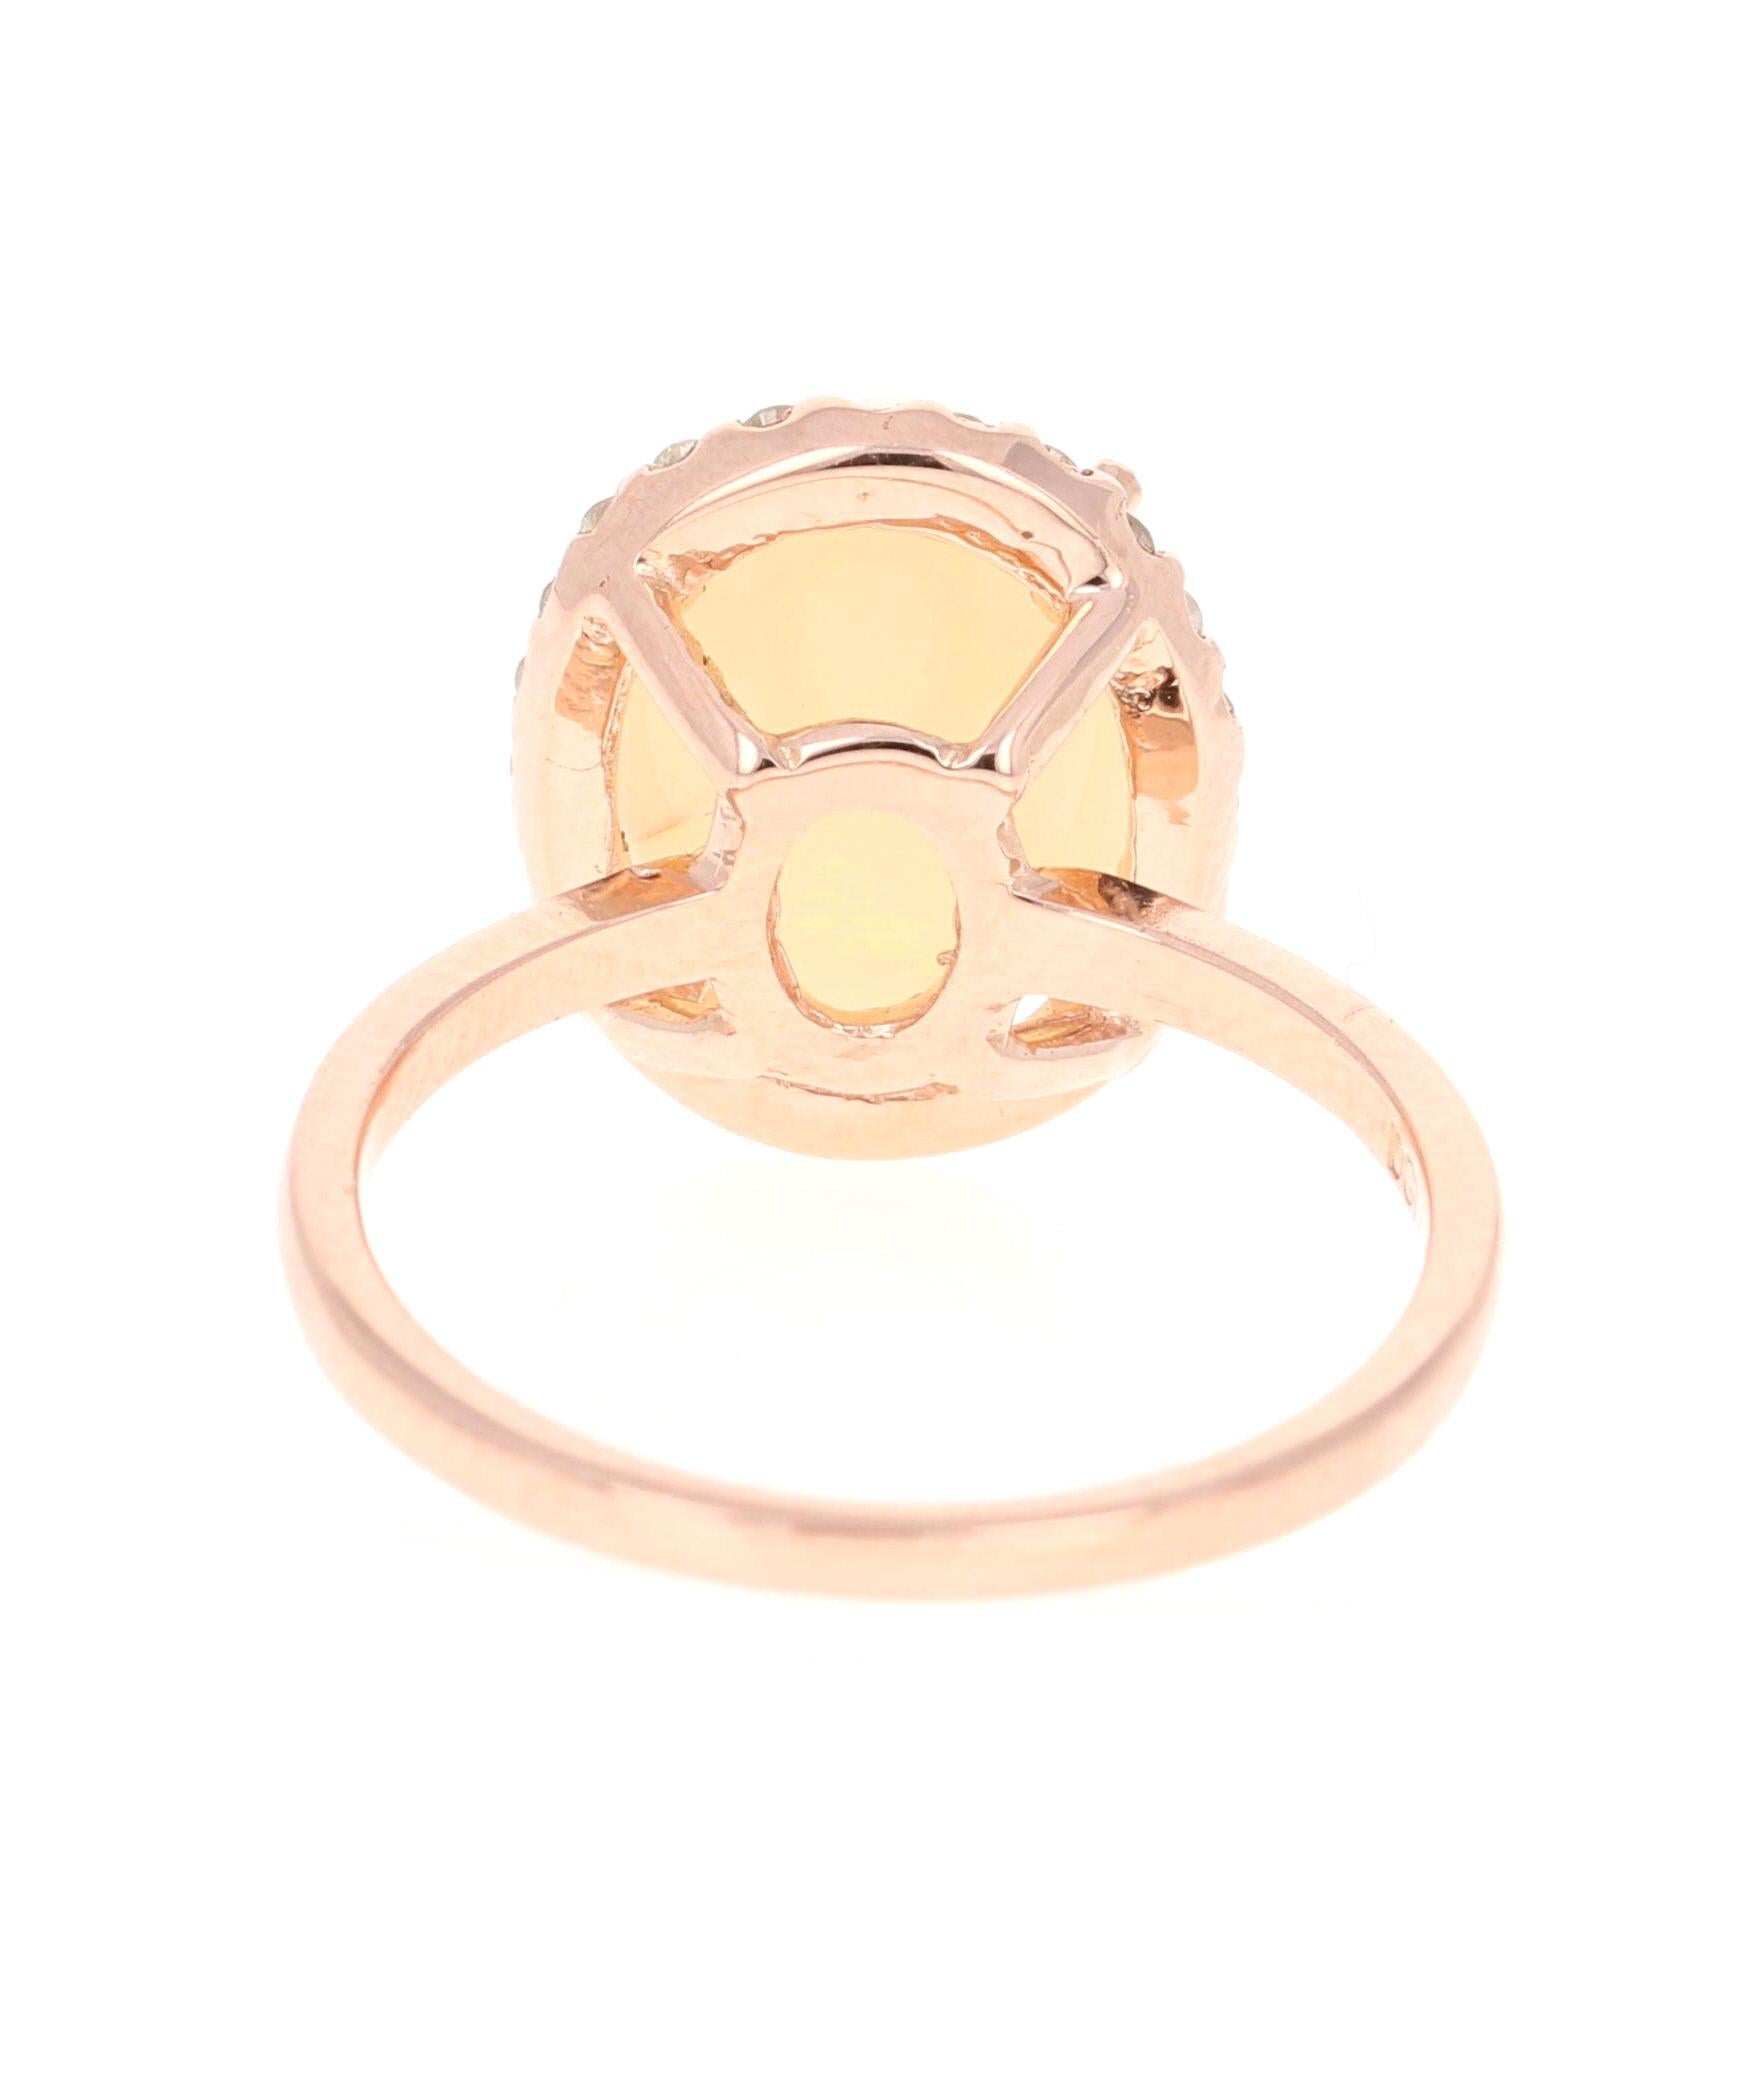 Oval Cut 3.17 Carat Opal Diamond 14 Karat Rose Gold Ring